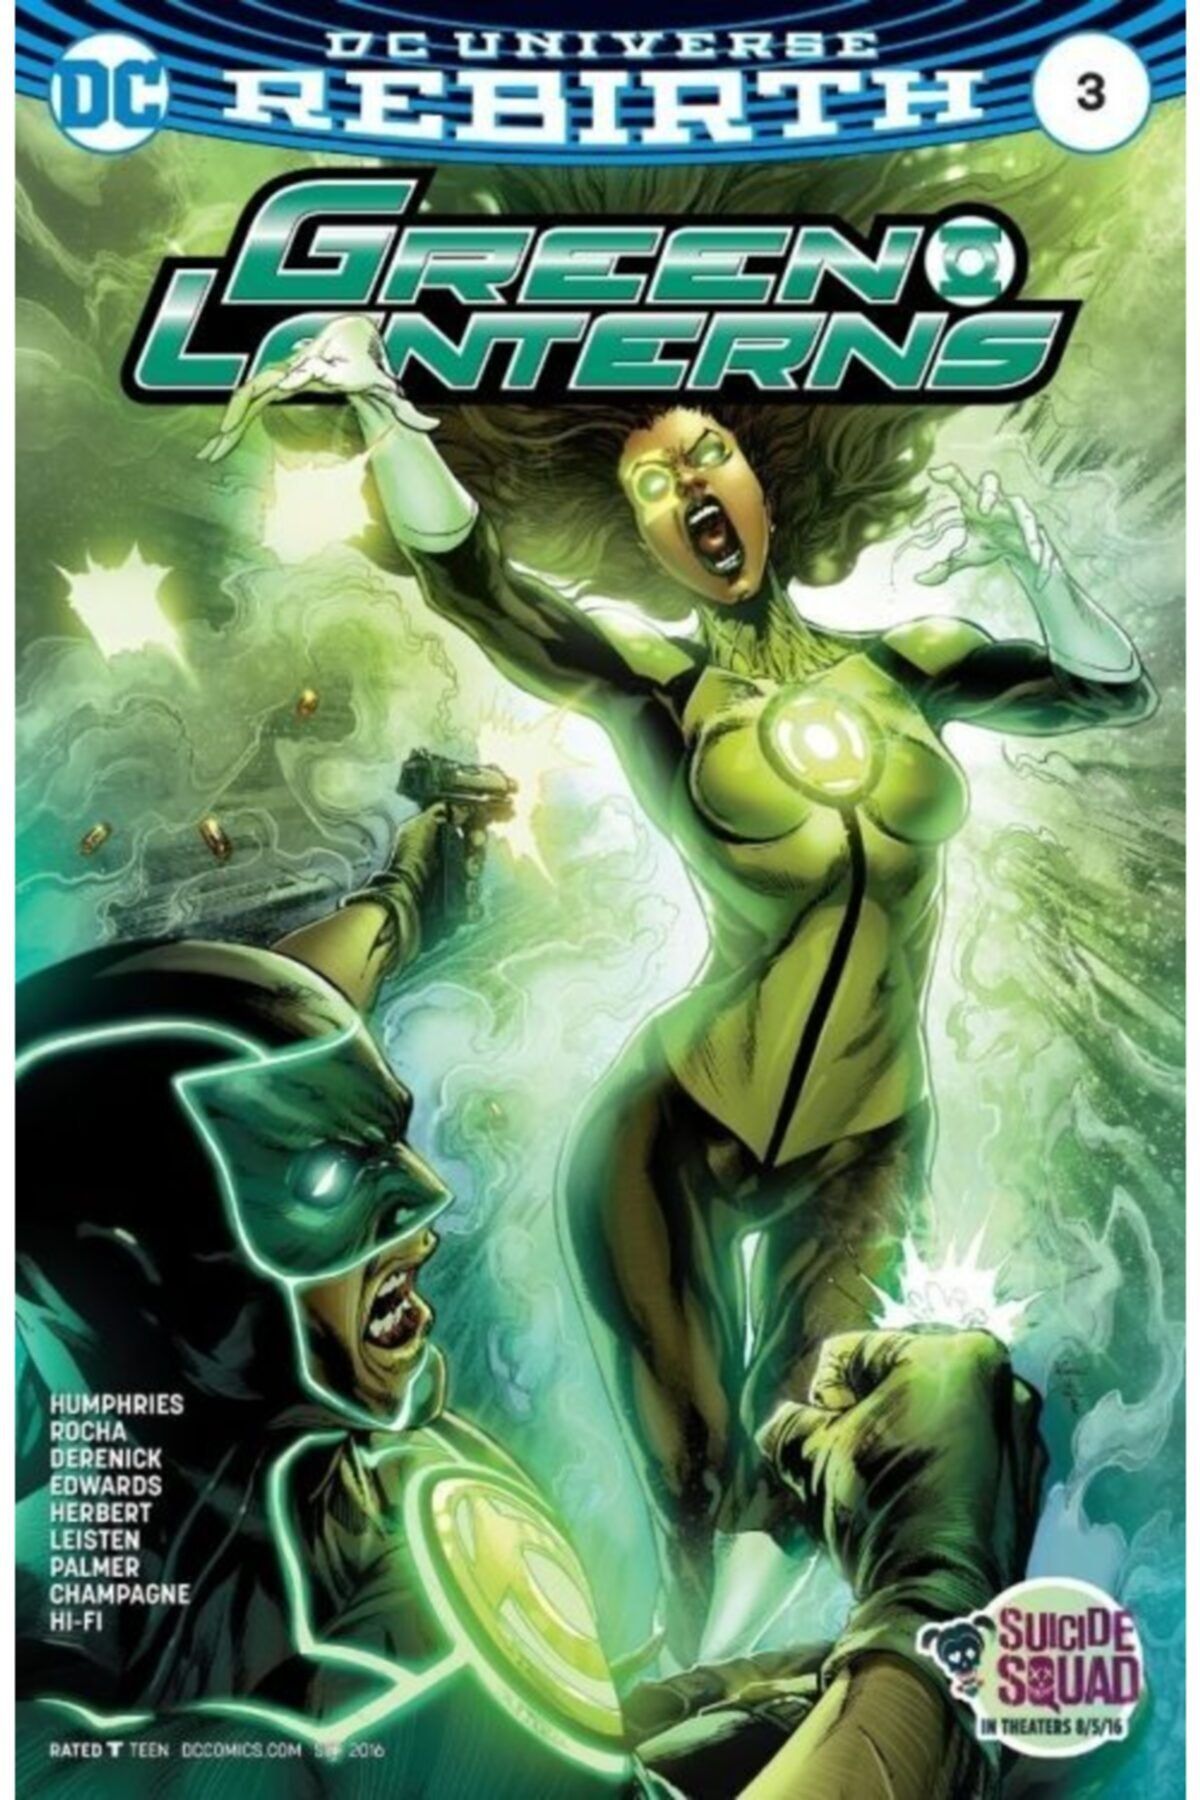 TM & DC Comics-Warner Bros Dc Universe Rebirth Green Lanterns #3 Fasikül Ingilizce Çizgi Roman